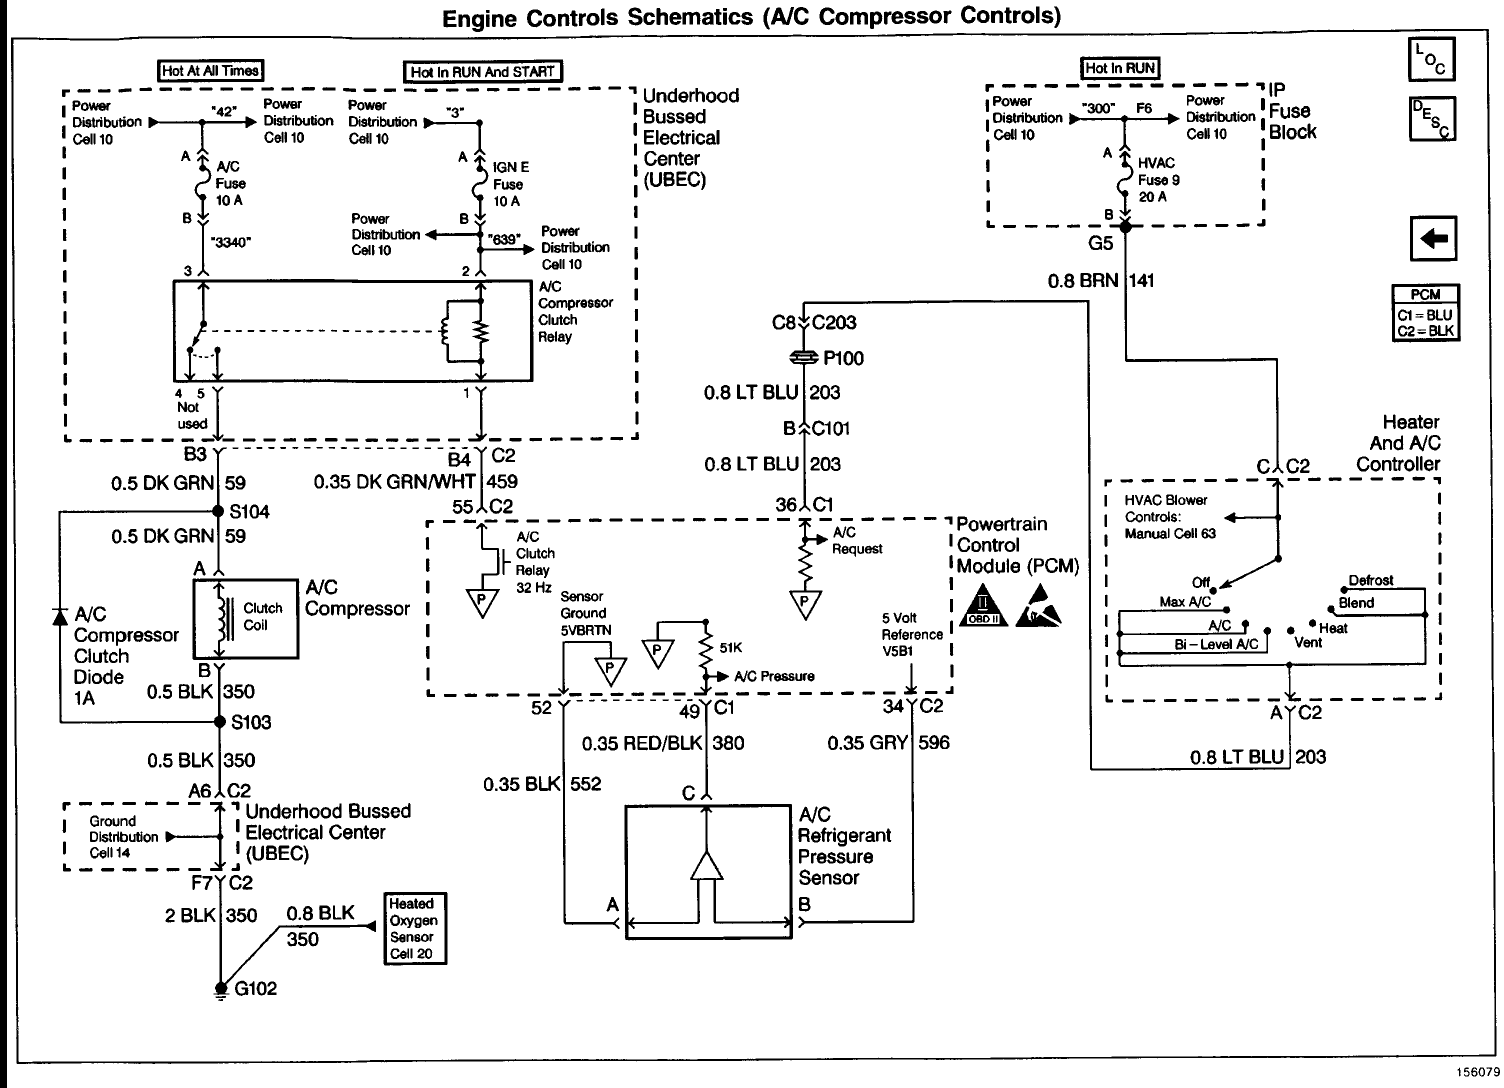 2001 Chevy Blazer Stereo Wiring Diagram from blazerforum.com